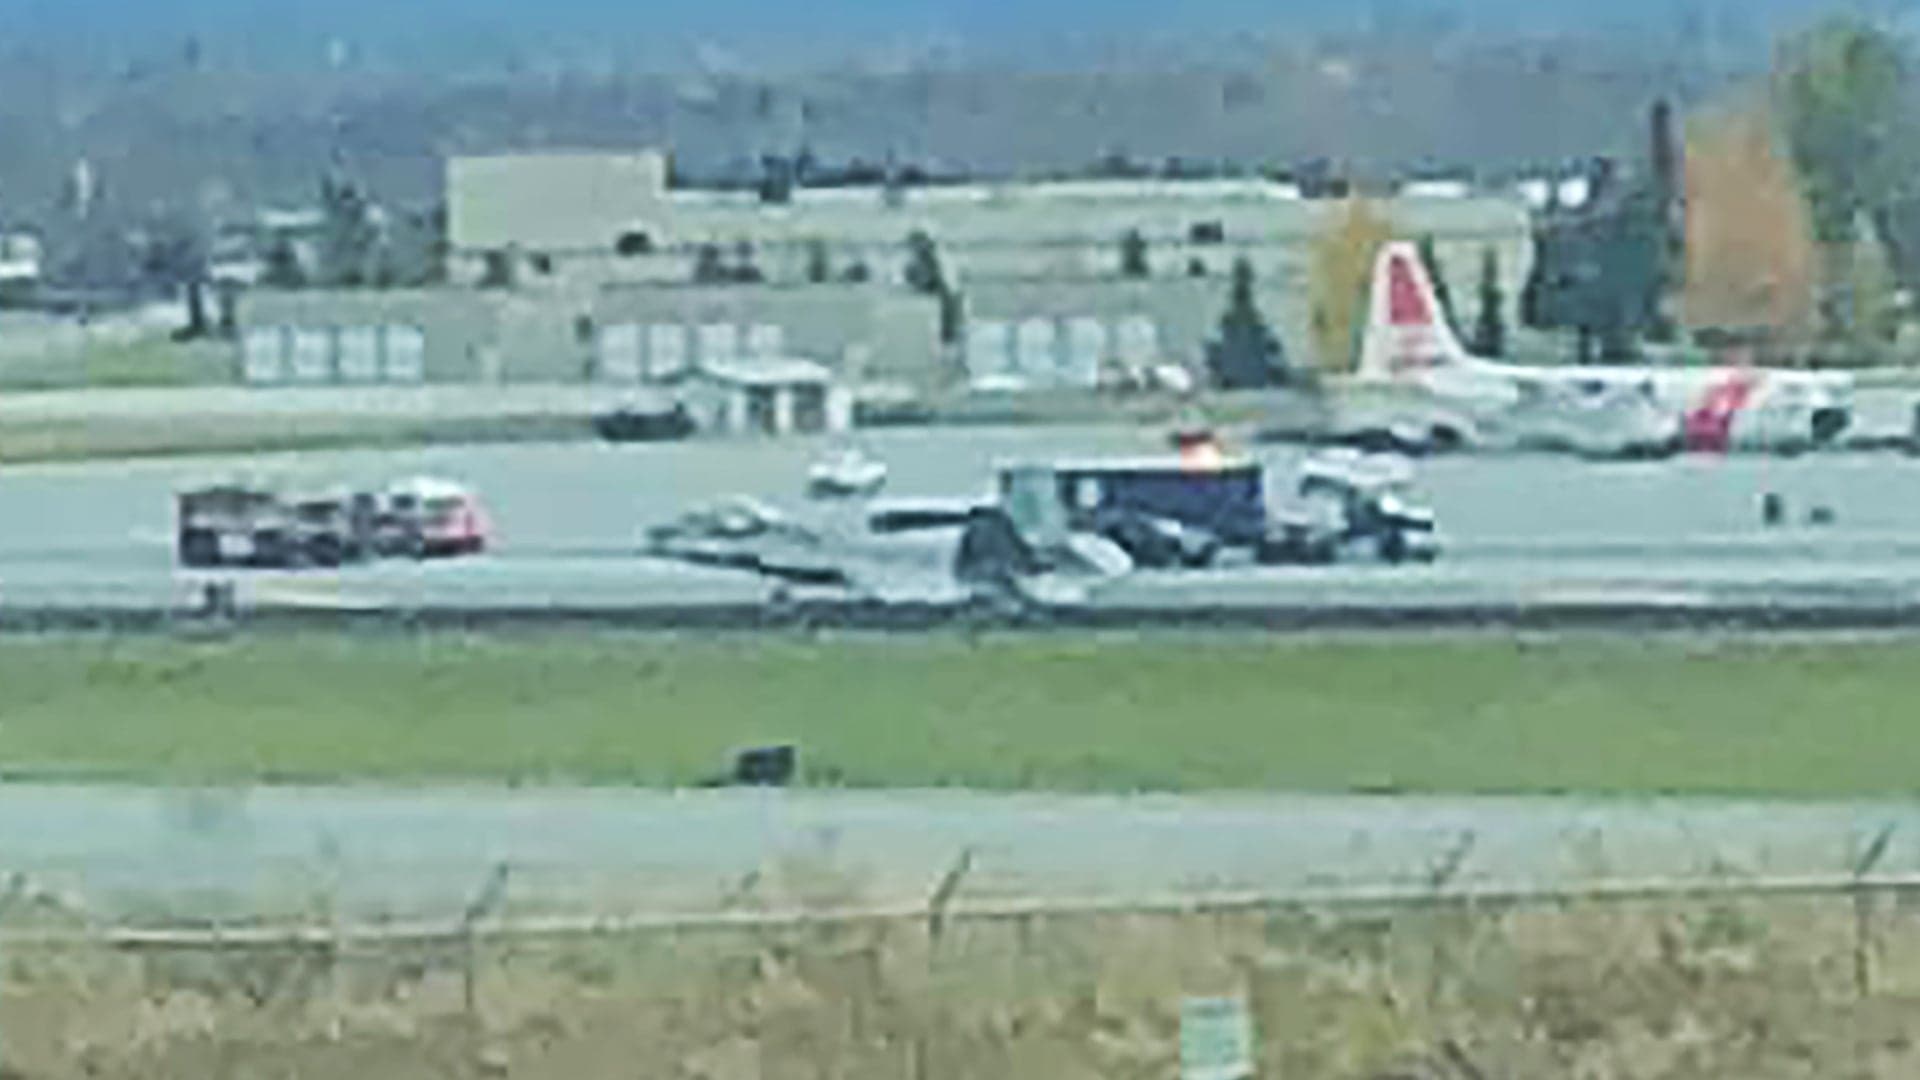 F-22 Raptor Came To A Rest On Its Side After Making Emergency Landing In Alaska